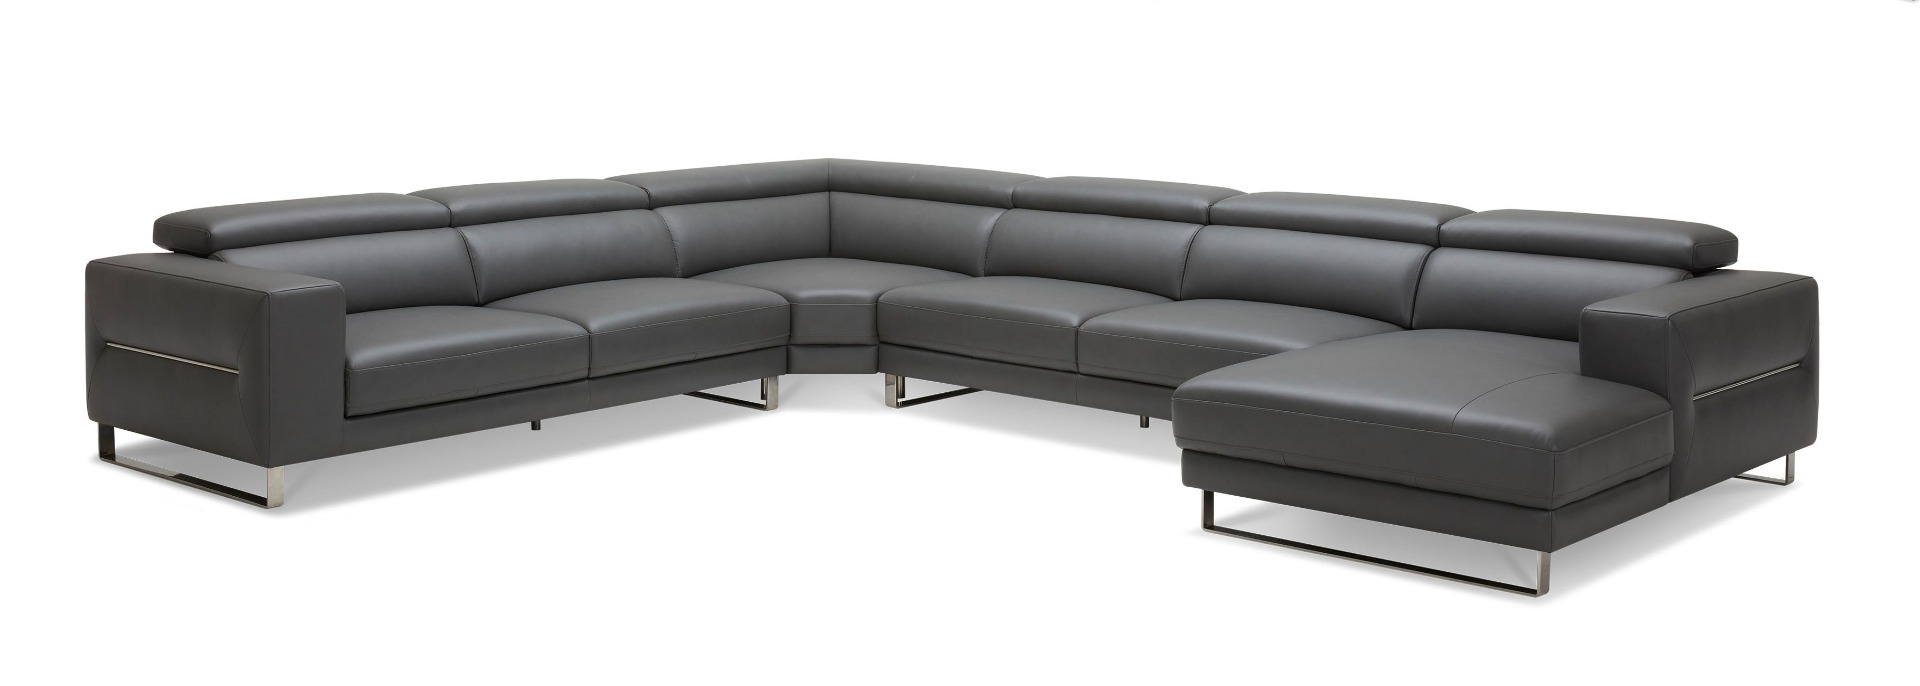 Divani Casa Hawkey – Contemporary Black Leather RAF Chaise Sectional Sofa